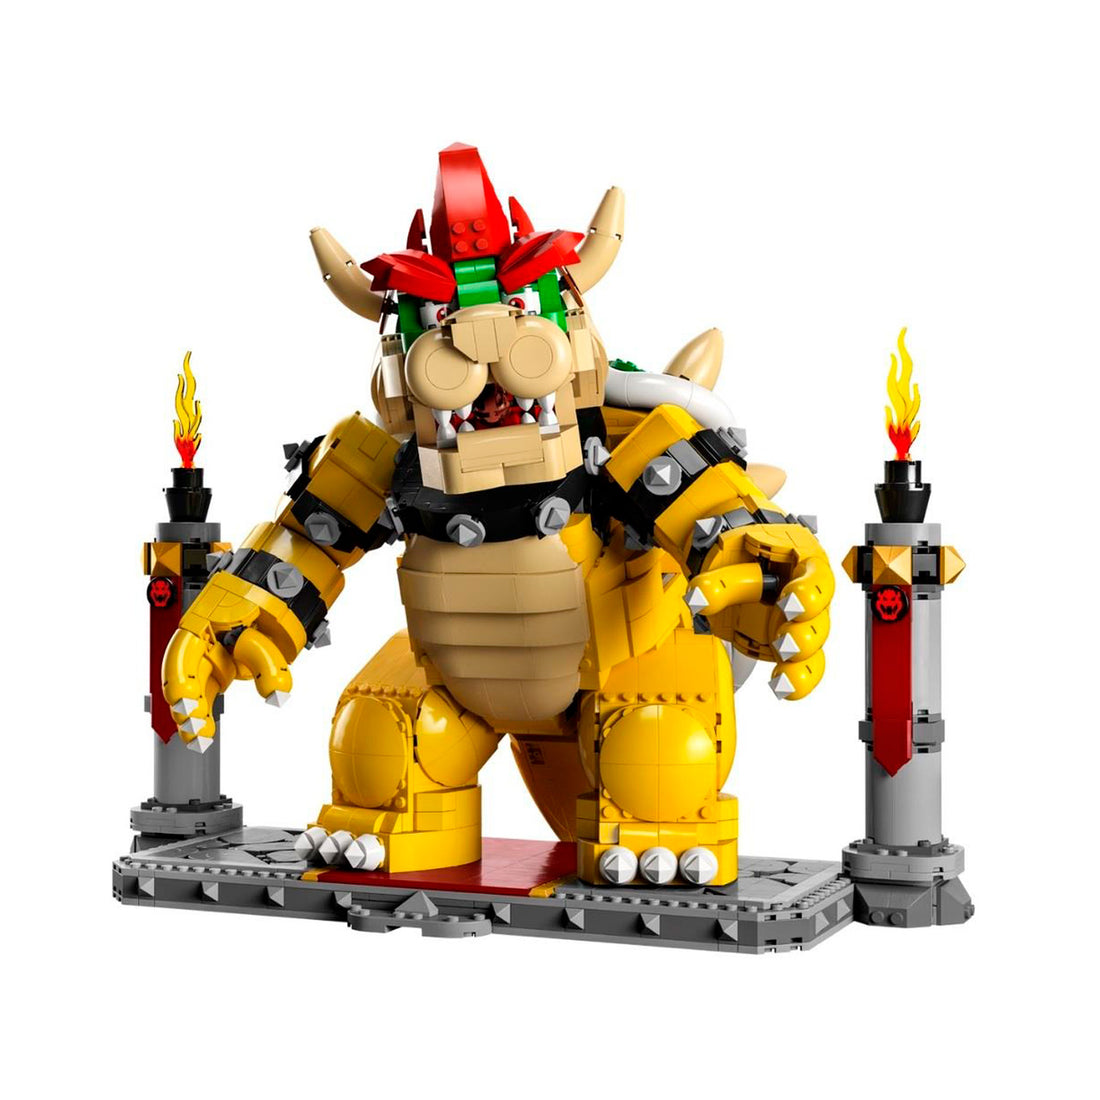 LEGO Super Mario - O Poderoso Bowser